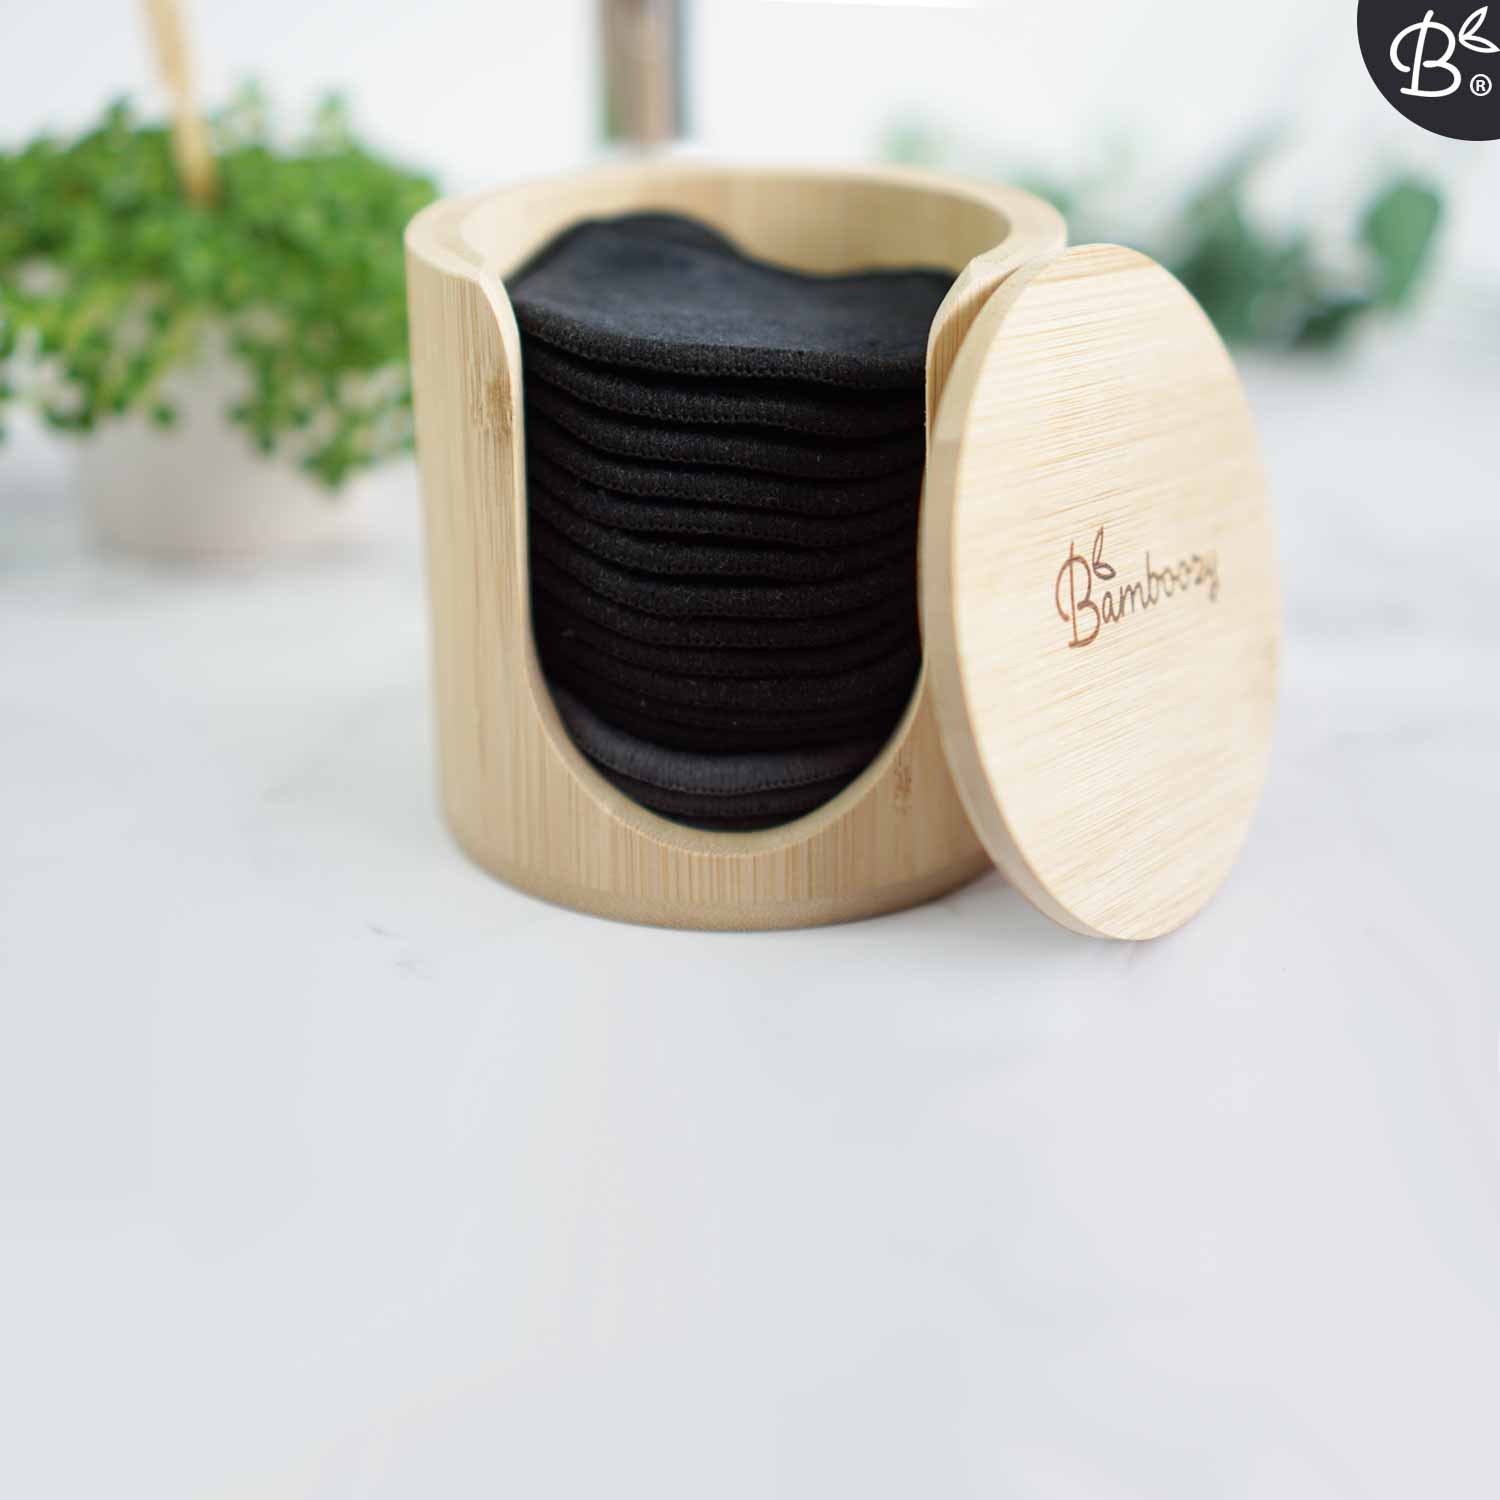 16x Black Reusable Cotton Pads + Bamboo Holder